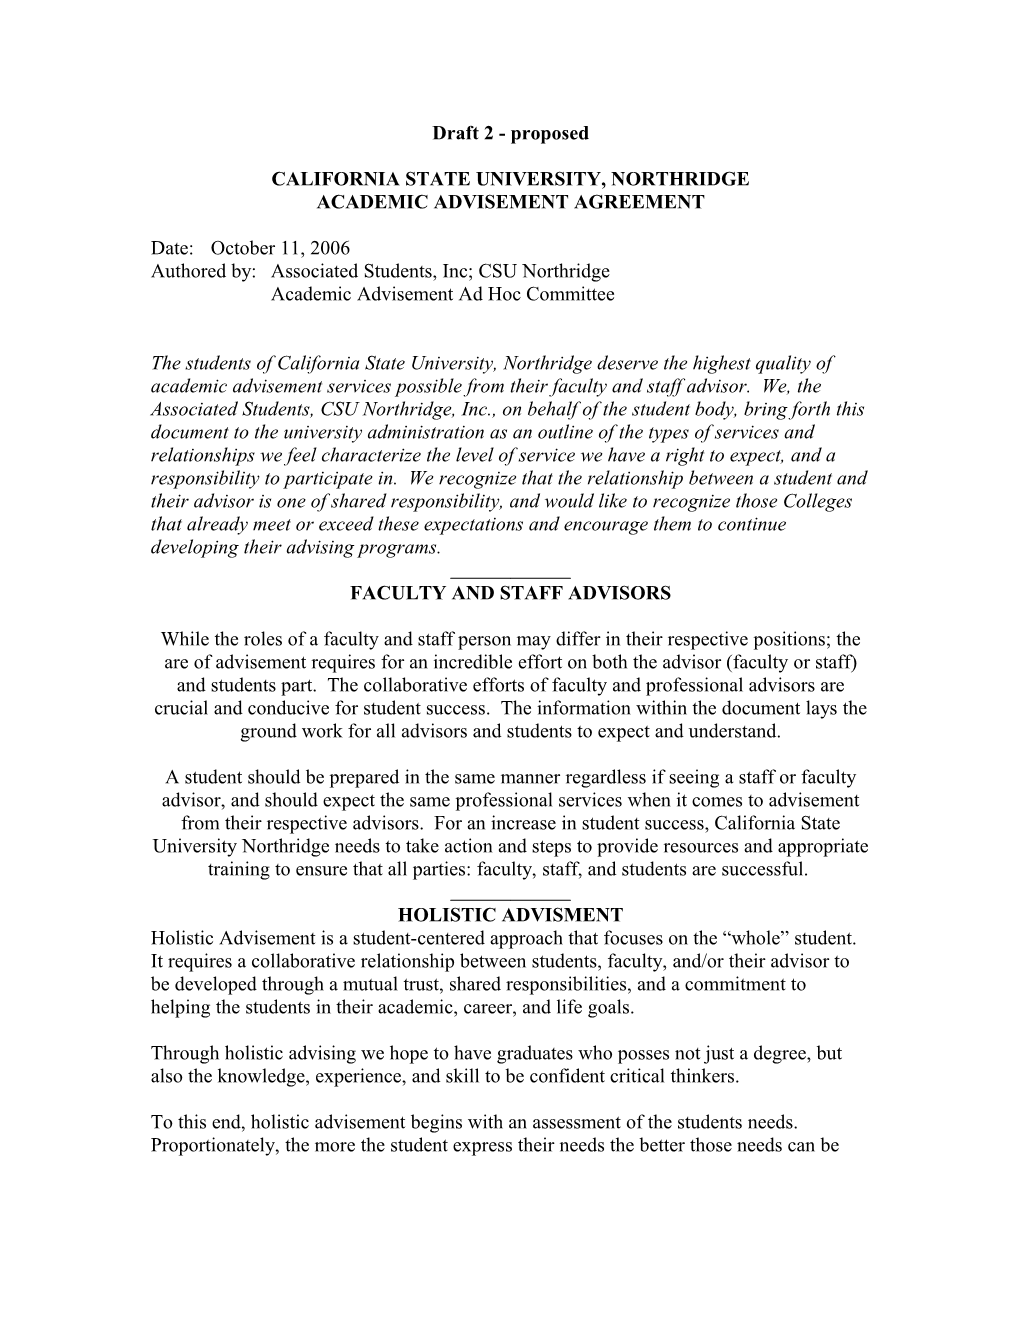 Academic Advisement Agreement